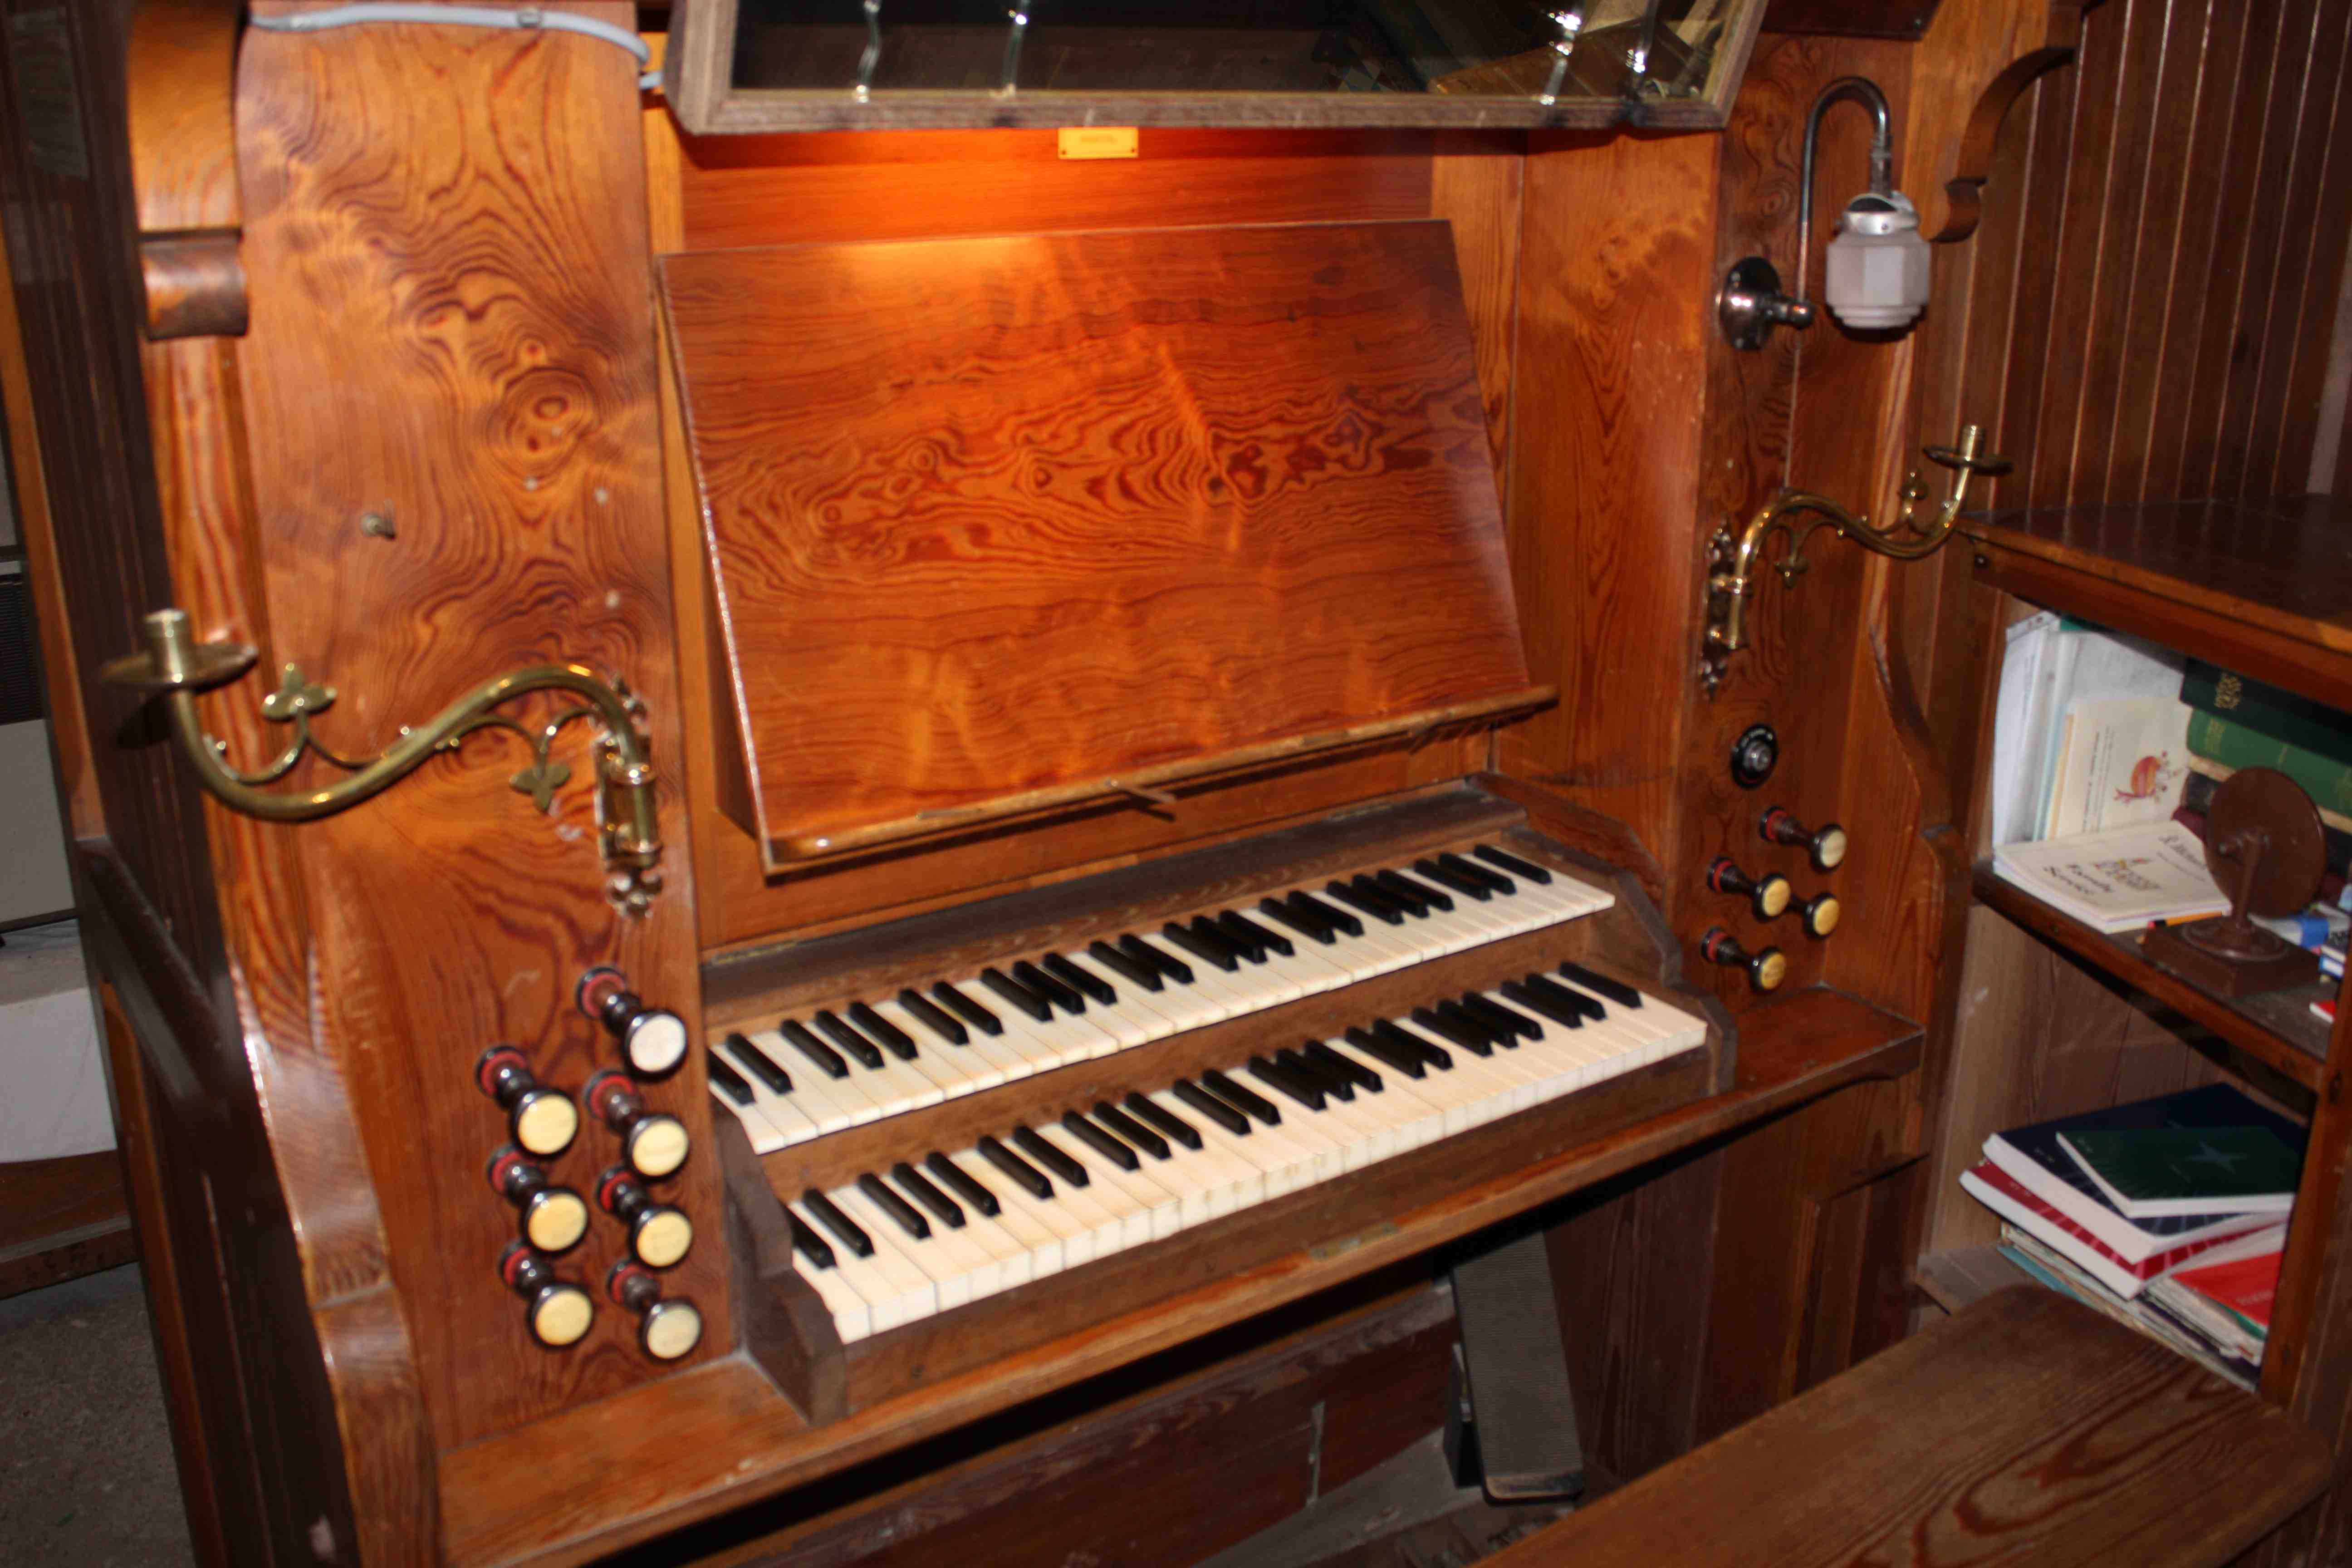 Butcombe Parish Church organ, which Milford played